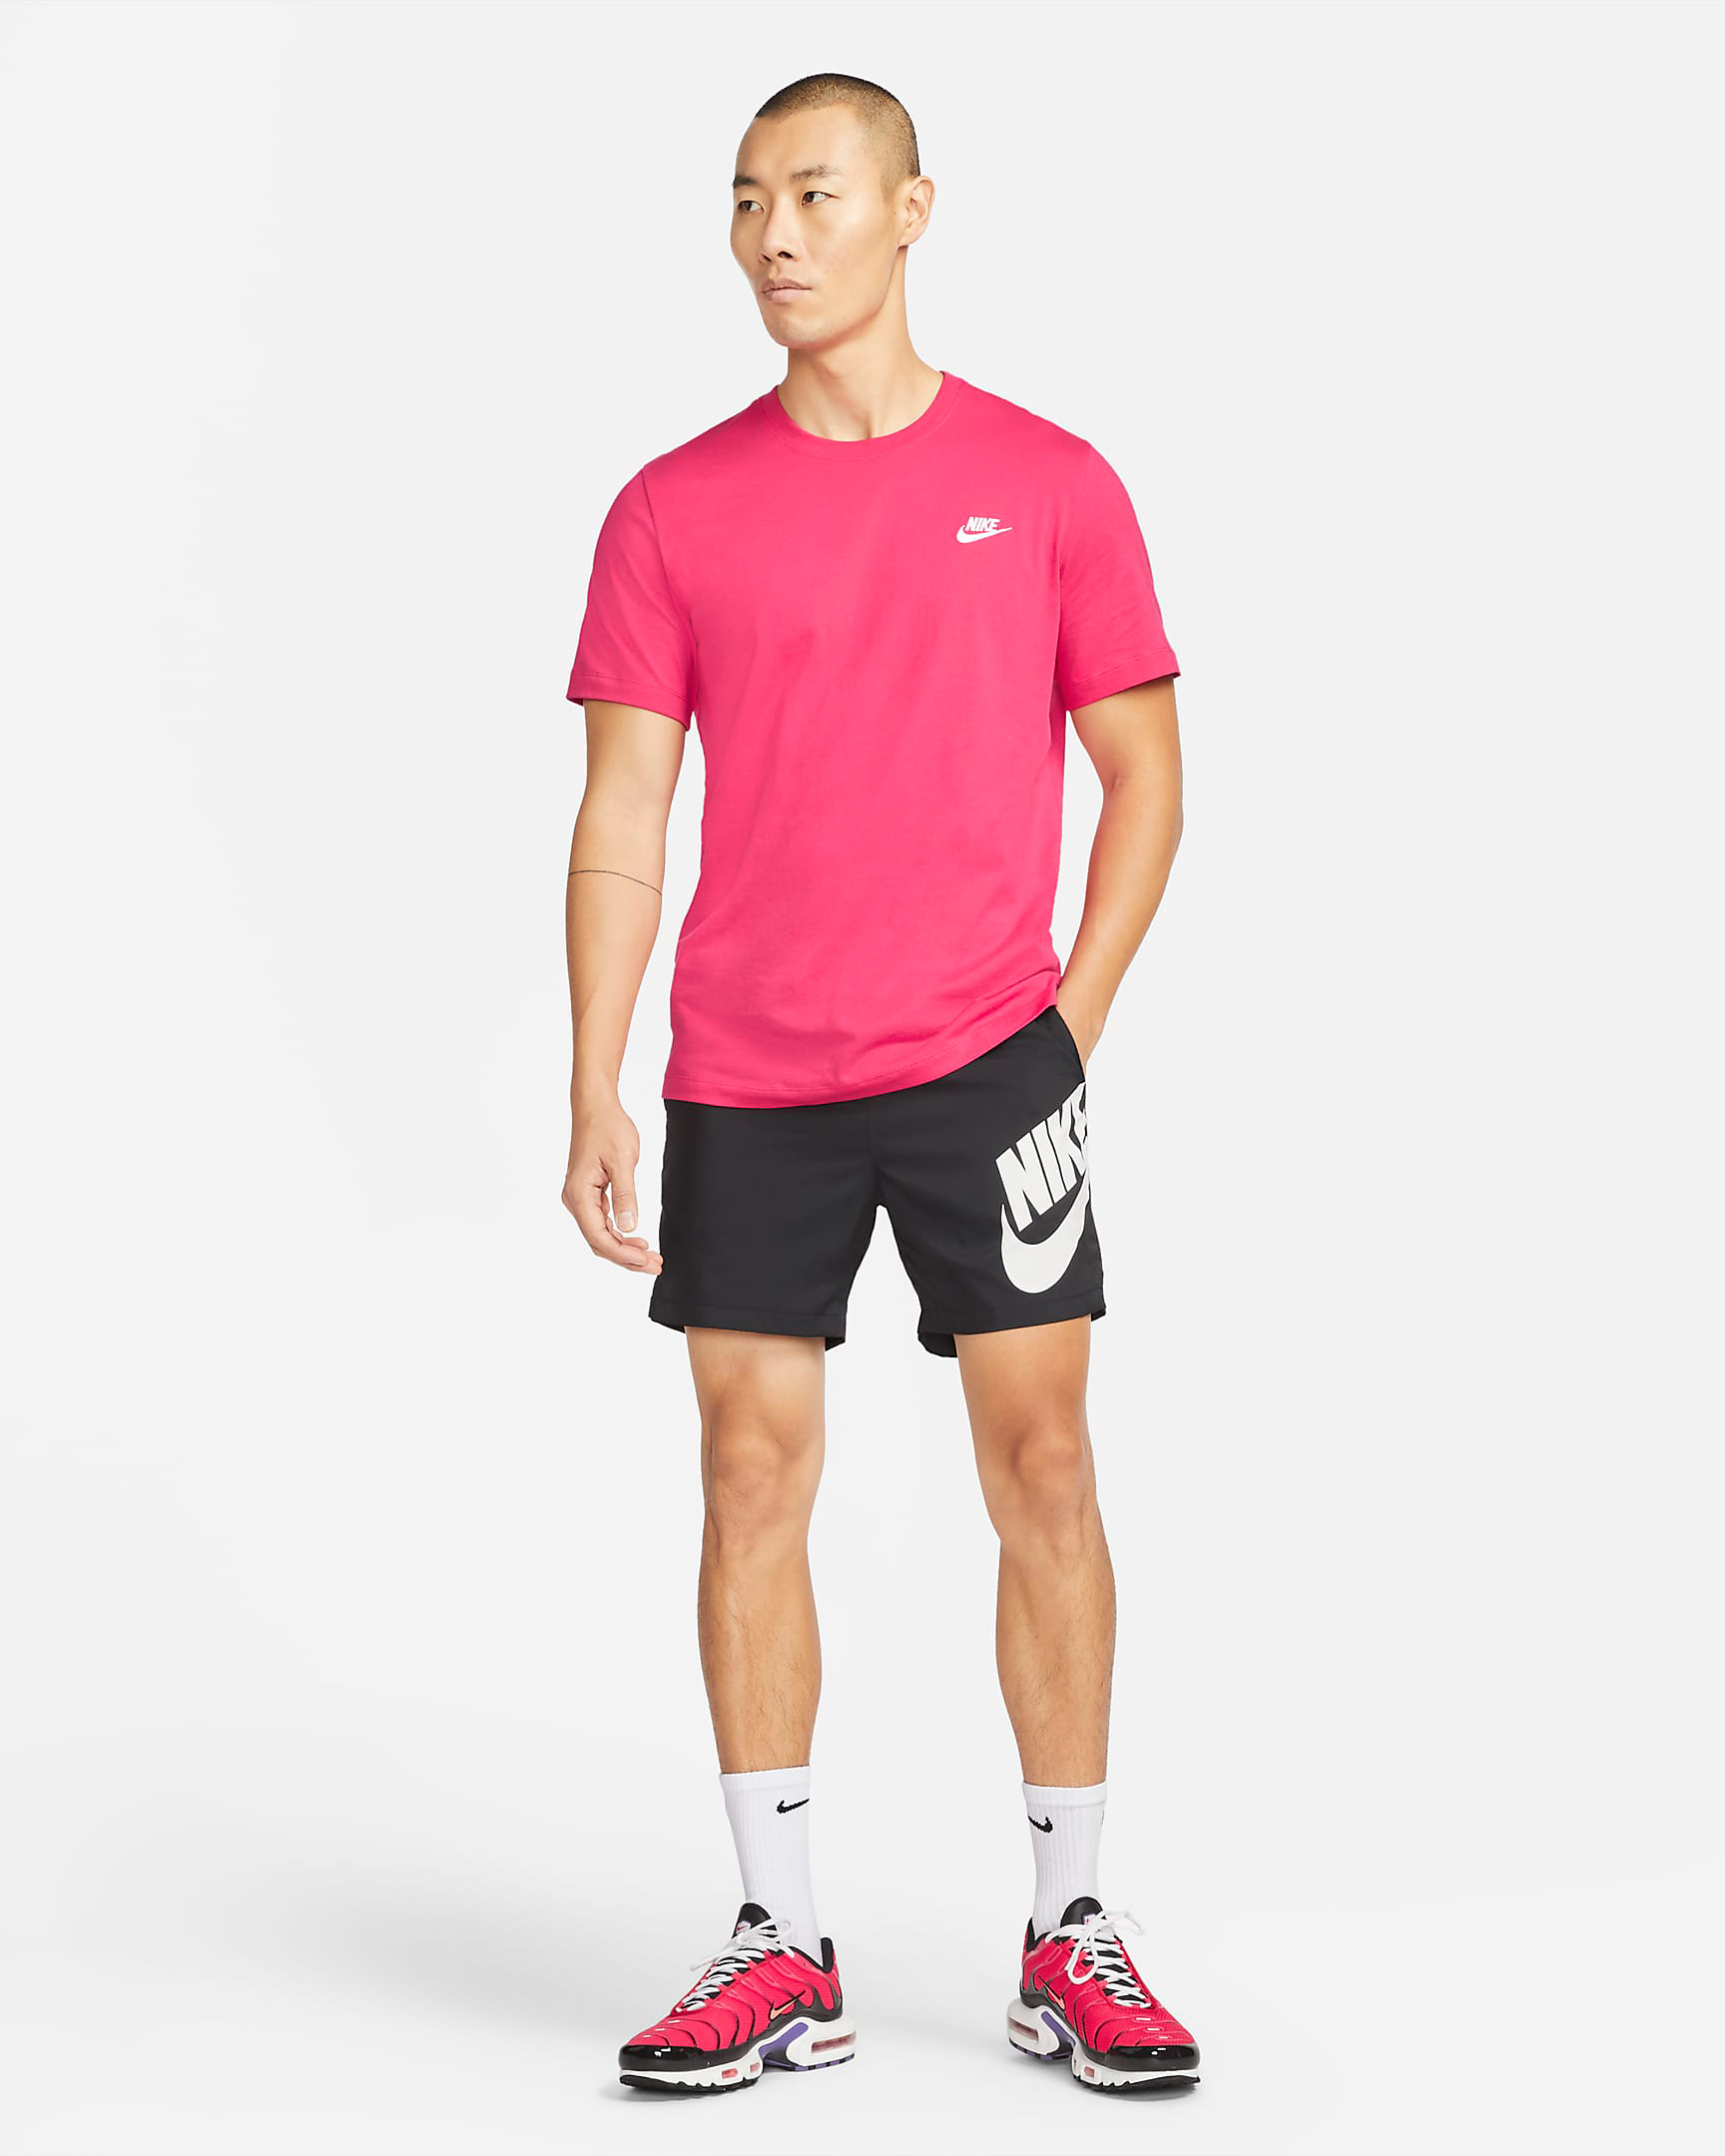 nike-rush-pink-shirt-sneakers